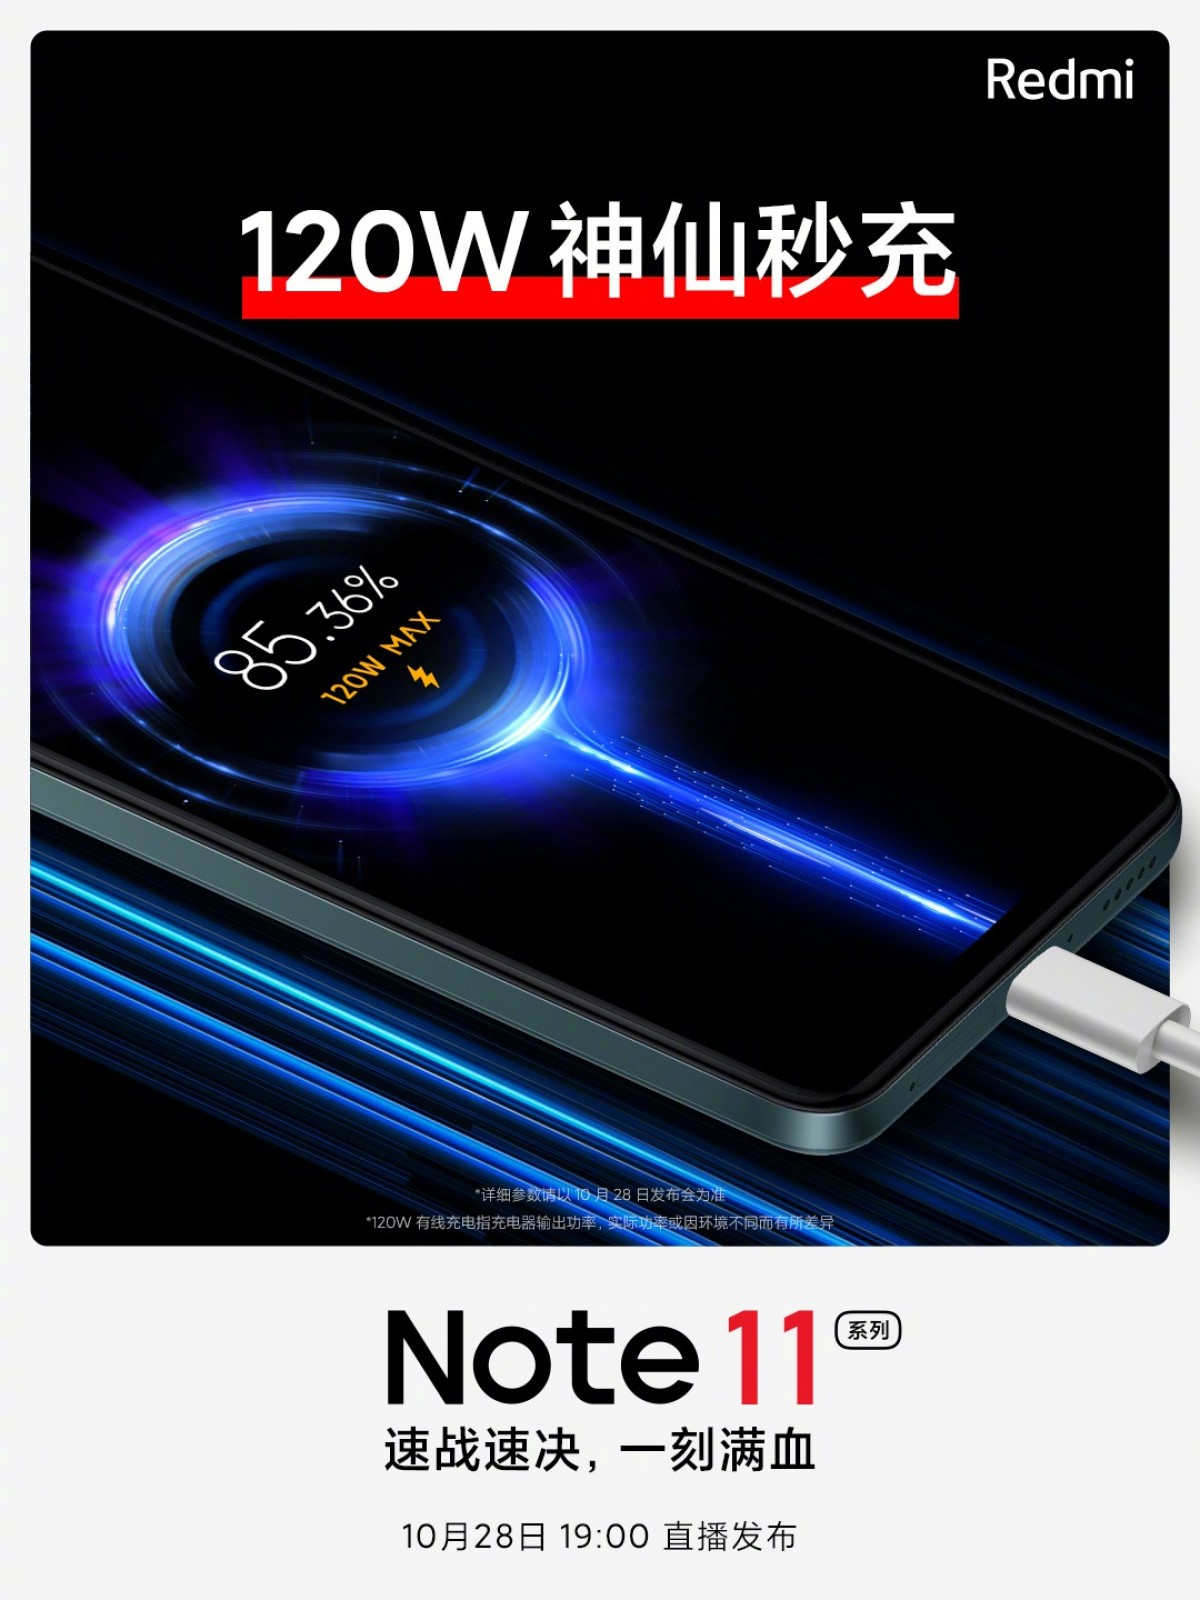 Xiaomi Redmi Note 11 series to bring 120W charging